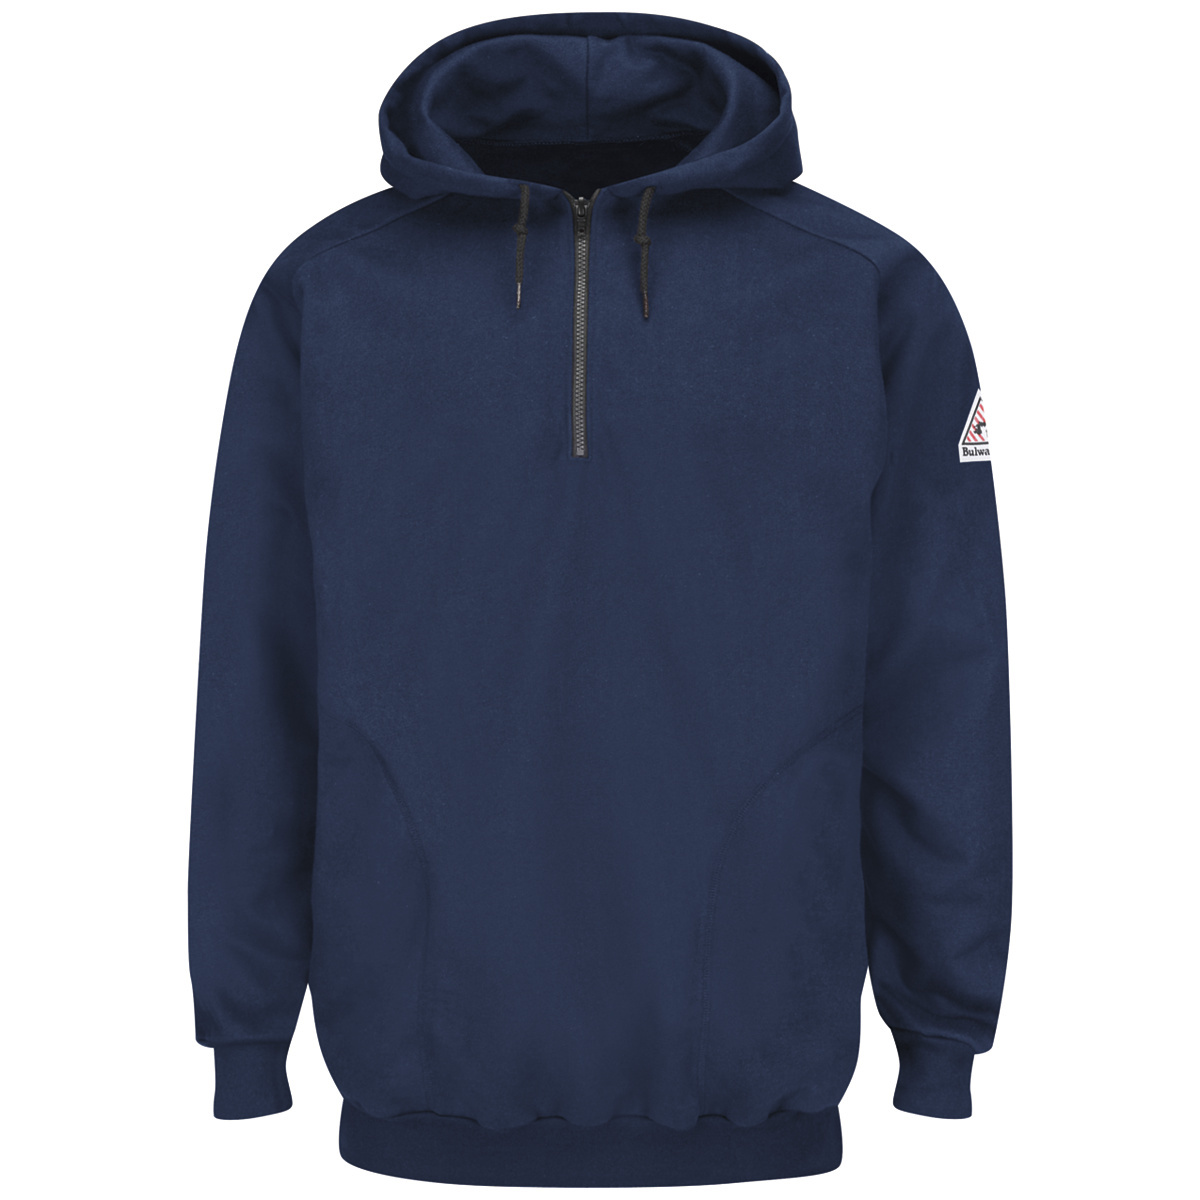 Bulwark® Large Regular Navy Blue Cotton/Spandex Brushed Fleece Flame Resistant Hooded Sweatshirt